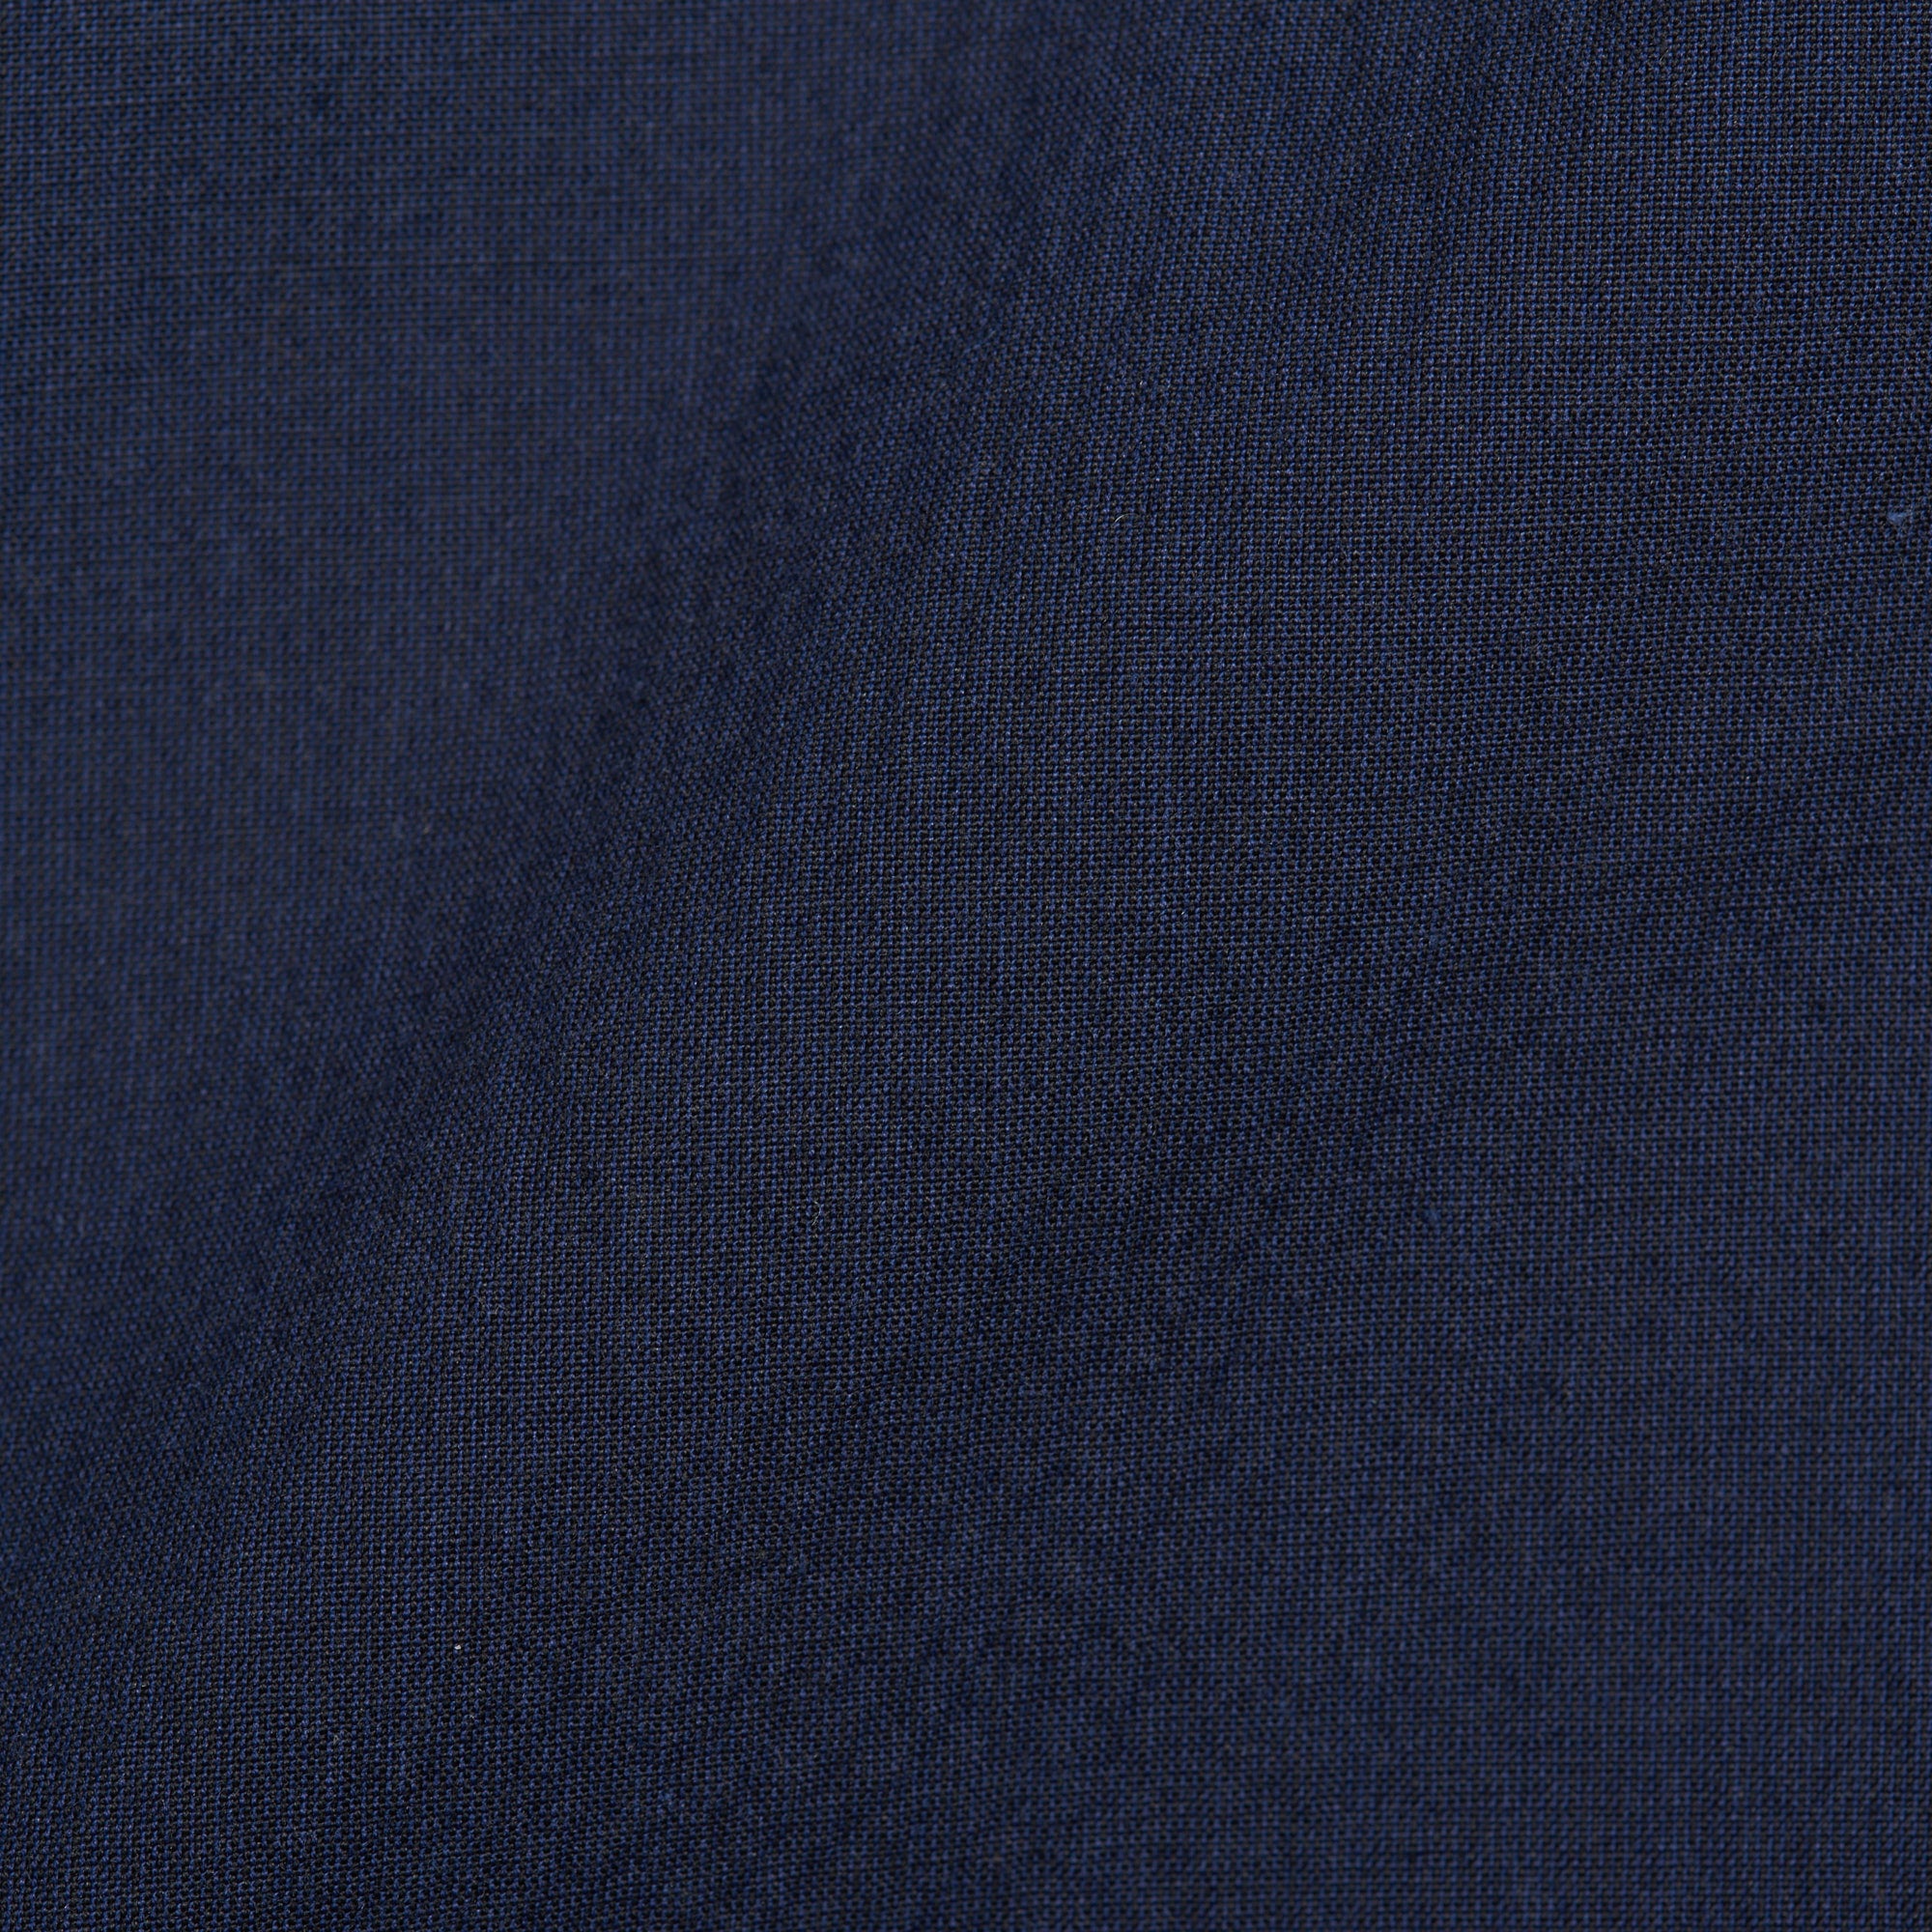 STILE LATINO Napoli Navy Blue Cotton Seersucker Spring-Summer Suit 48 NEW US 38